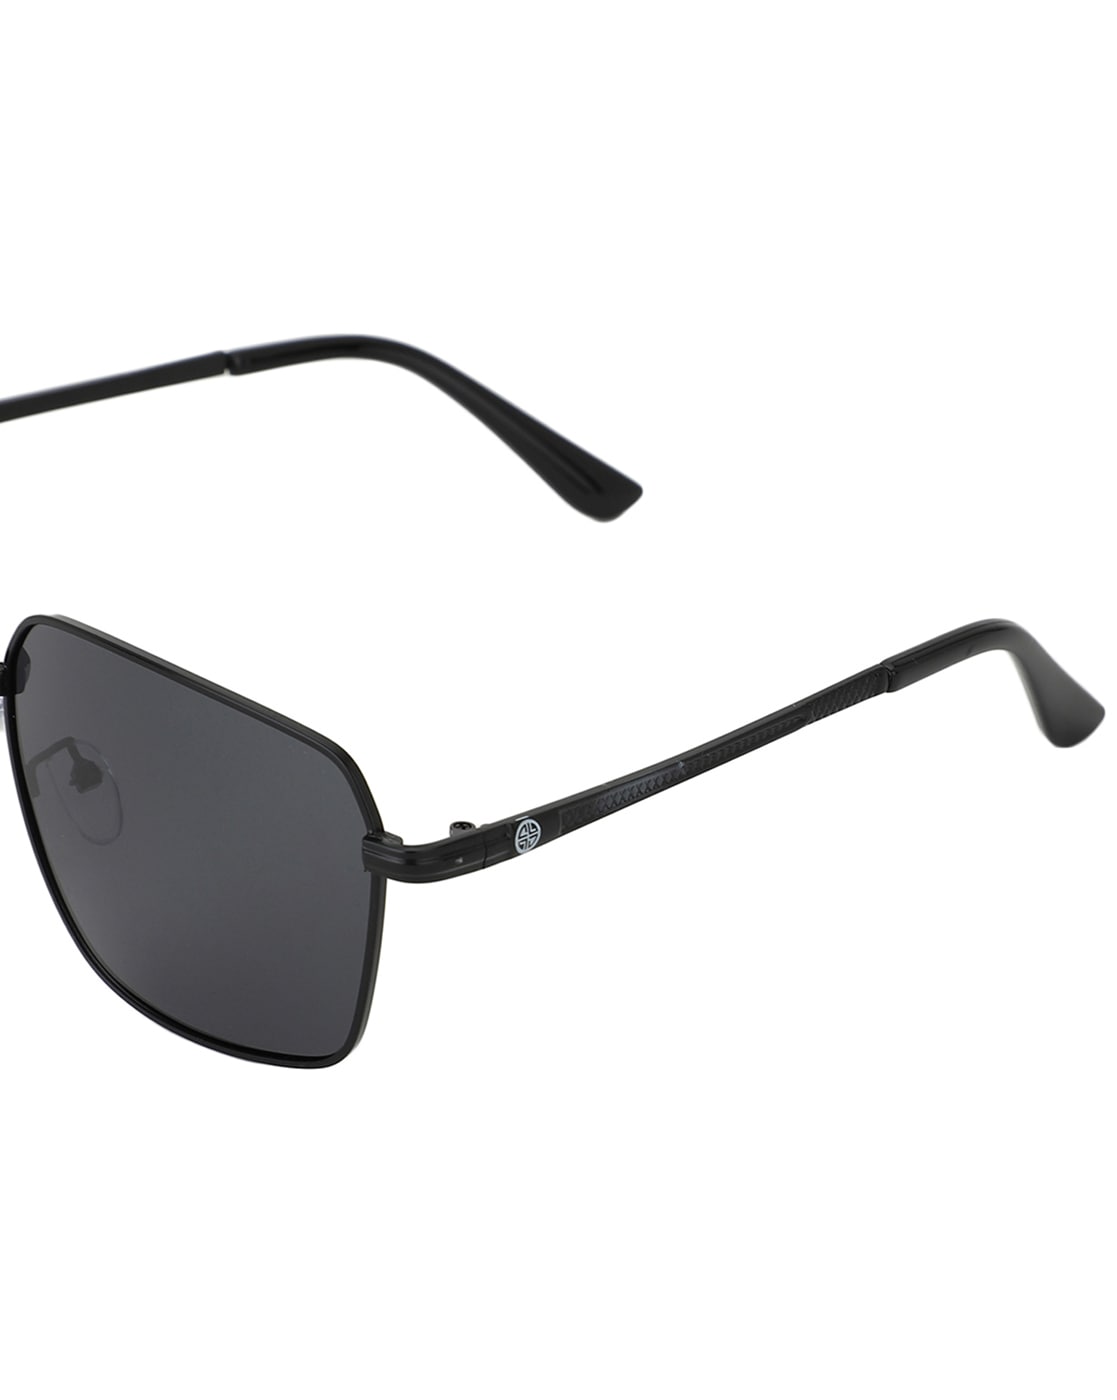 Black Society Sunglasses – Slim Shadies Celebrity Sunglasses